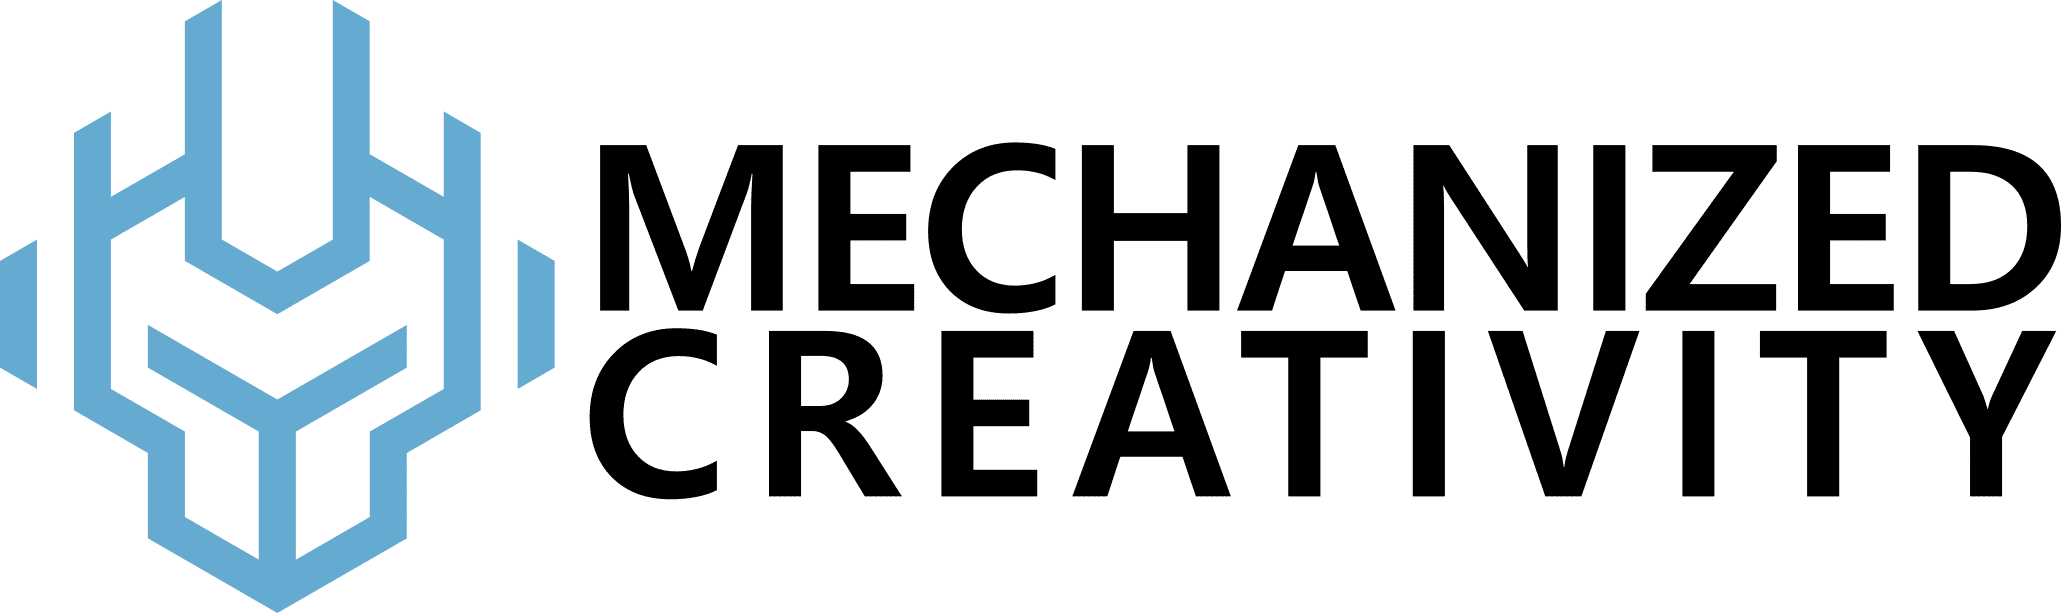 Mechanized Creativity